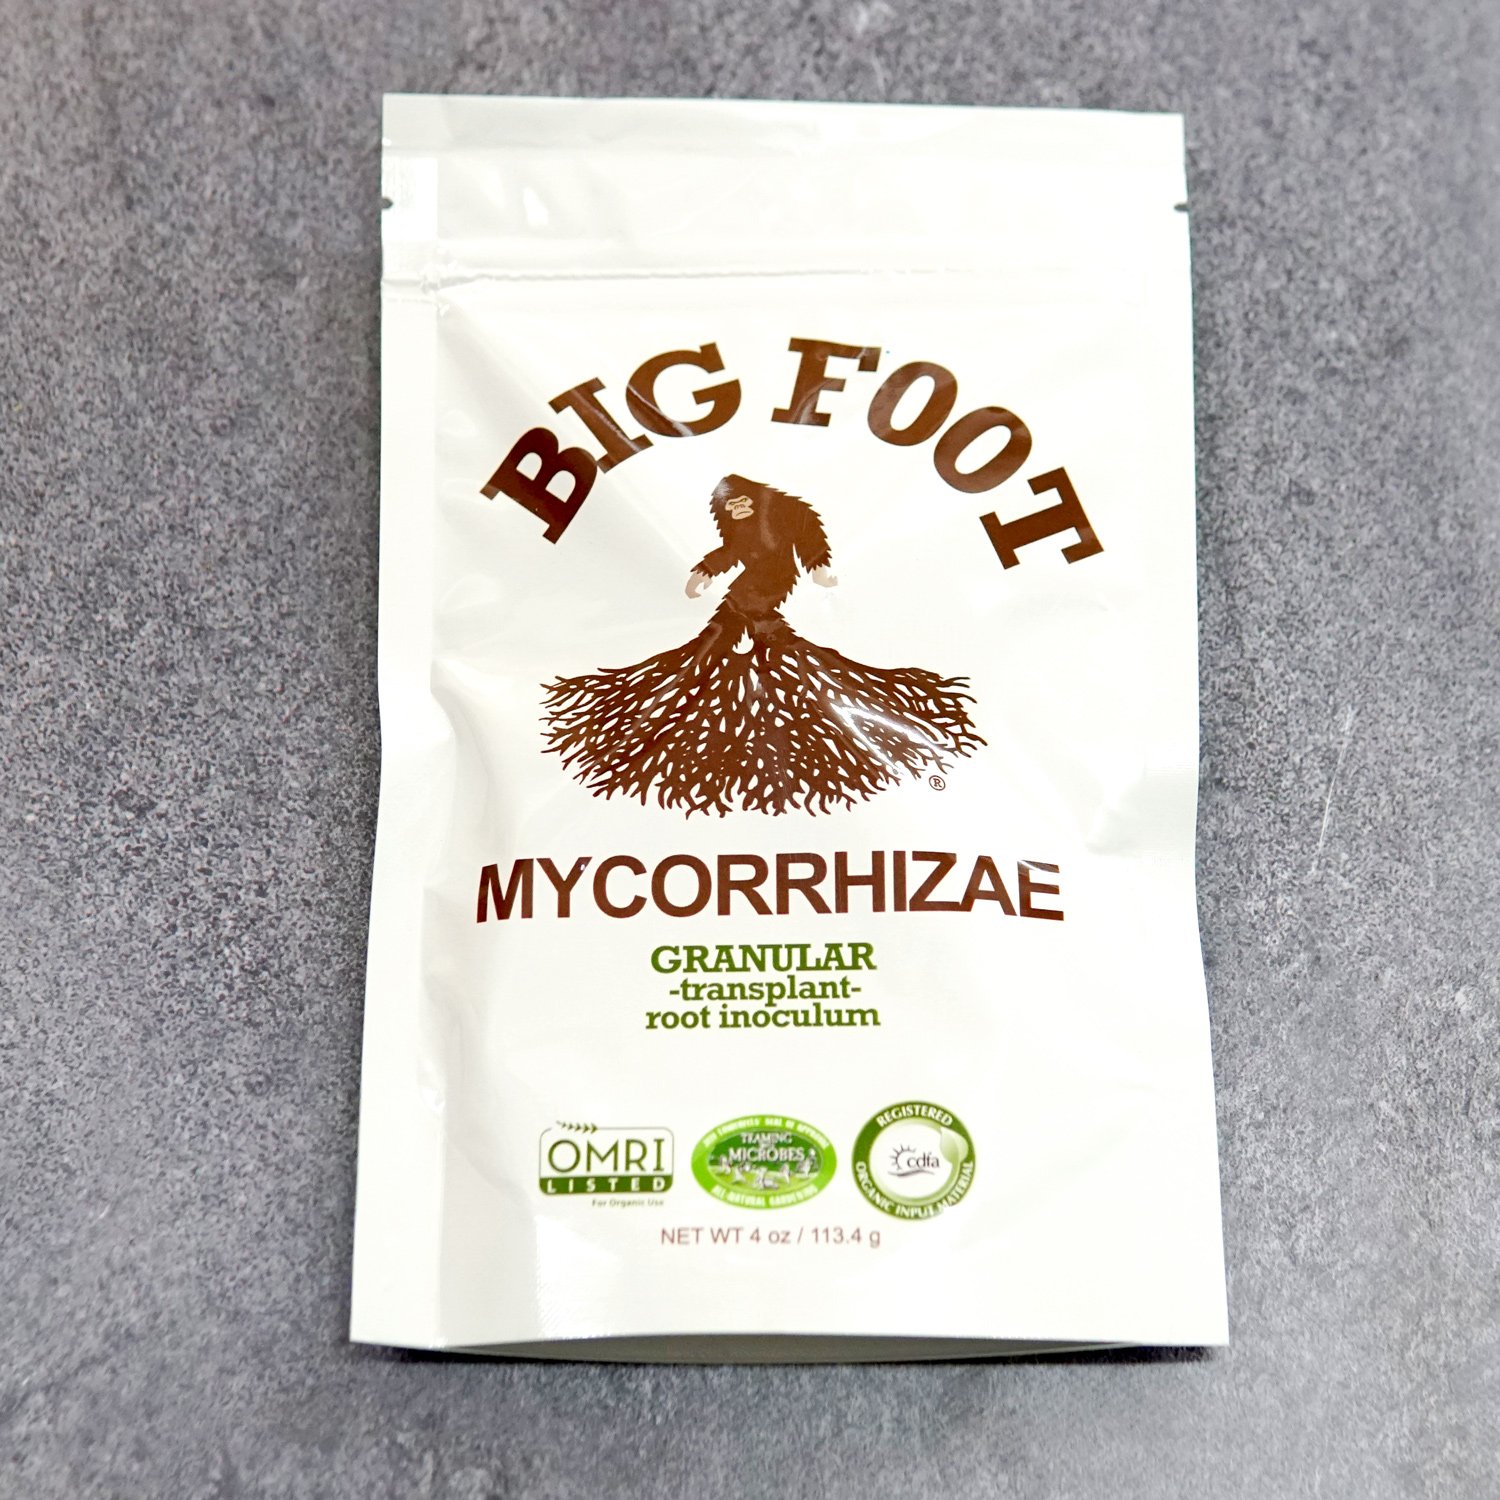 Big Foot Granular Mycorrhizae